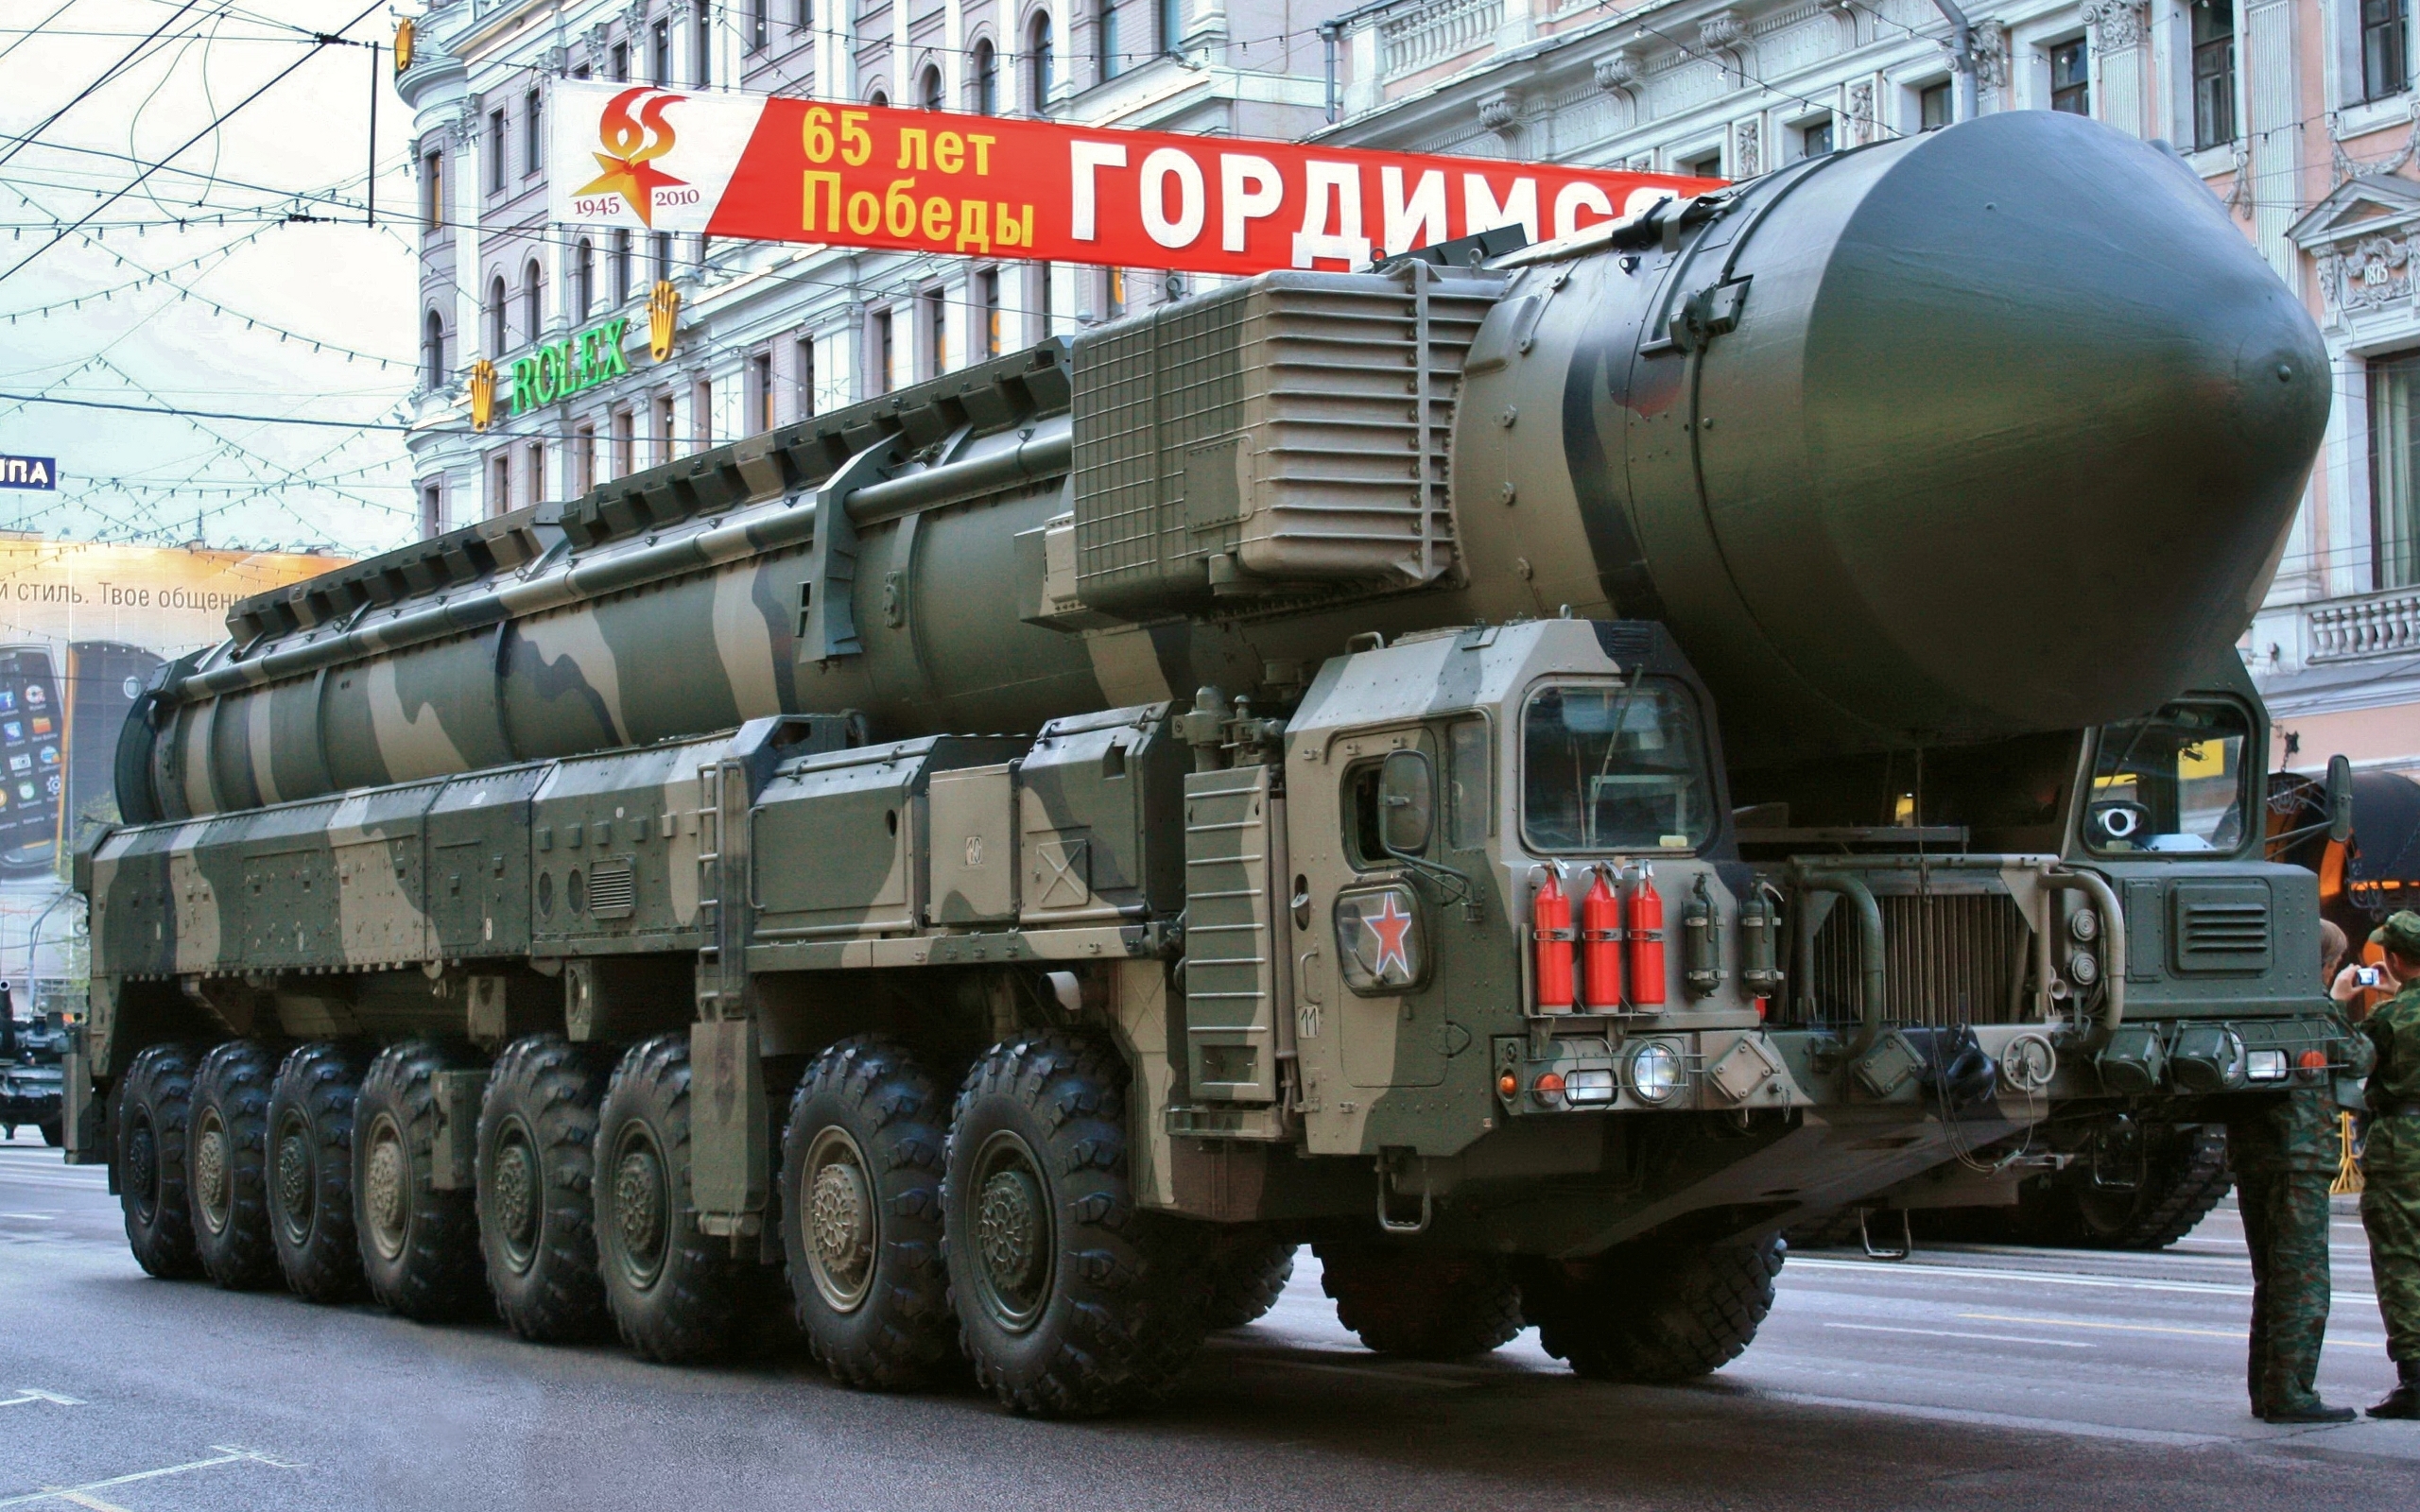 252986 descargar imagen lanzacohetes, militar, ruso: fondos de pantalla y protectores de pantalla gratis